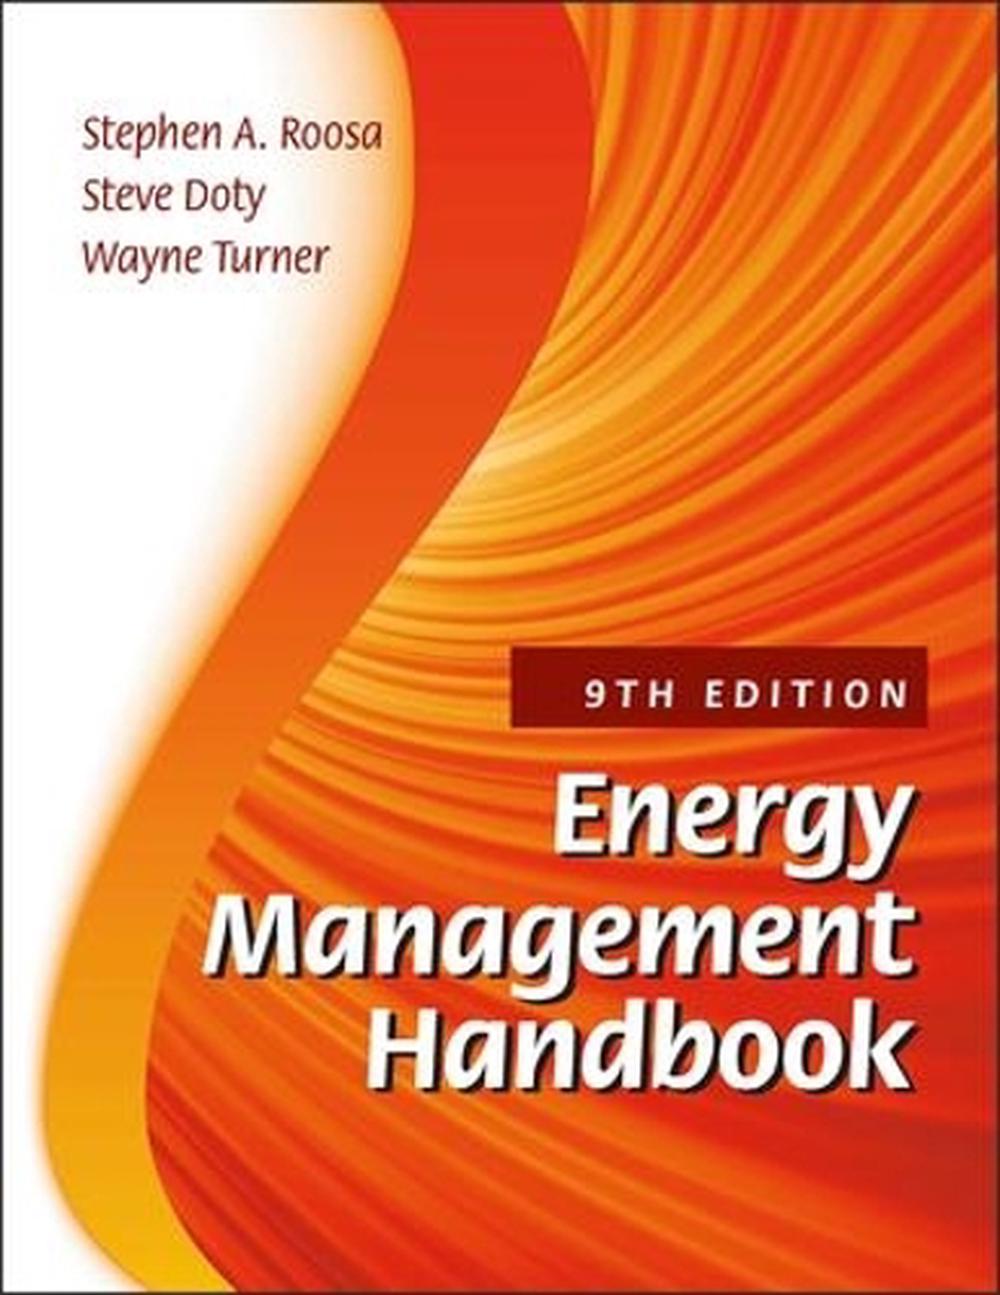 energy management handbook 8th edition pdf free download